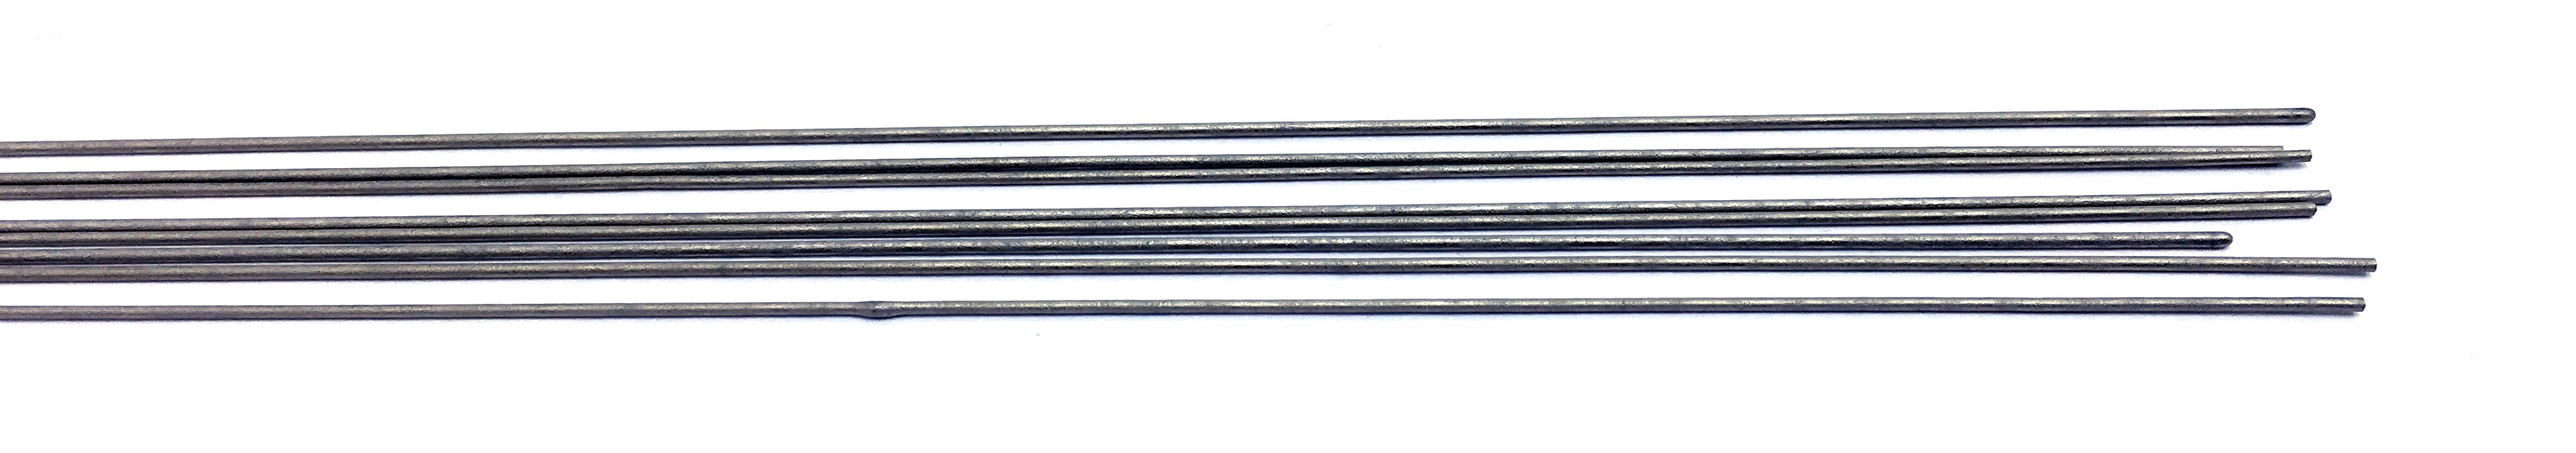 Chrome Cobalt Welding Rod Thin, 1oz, 16 pcs/pack.